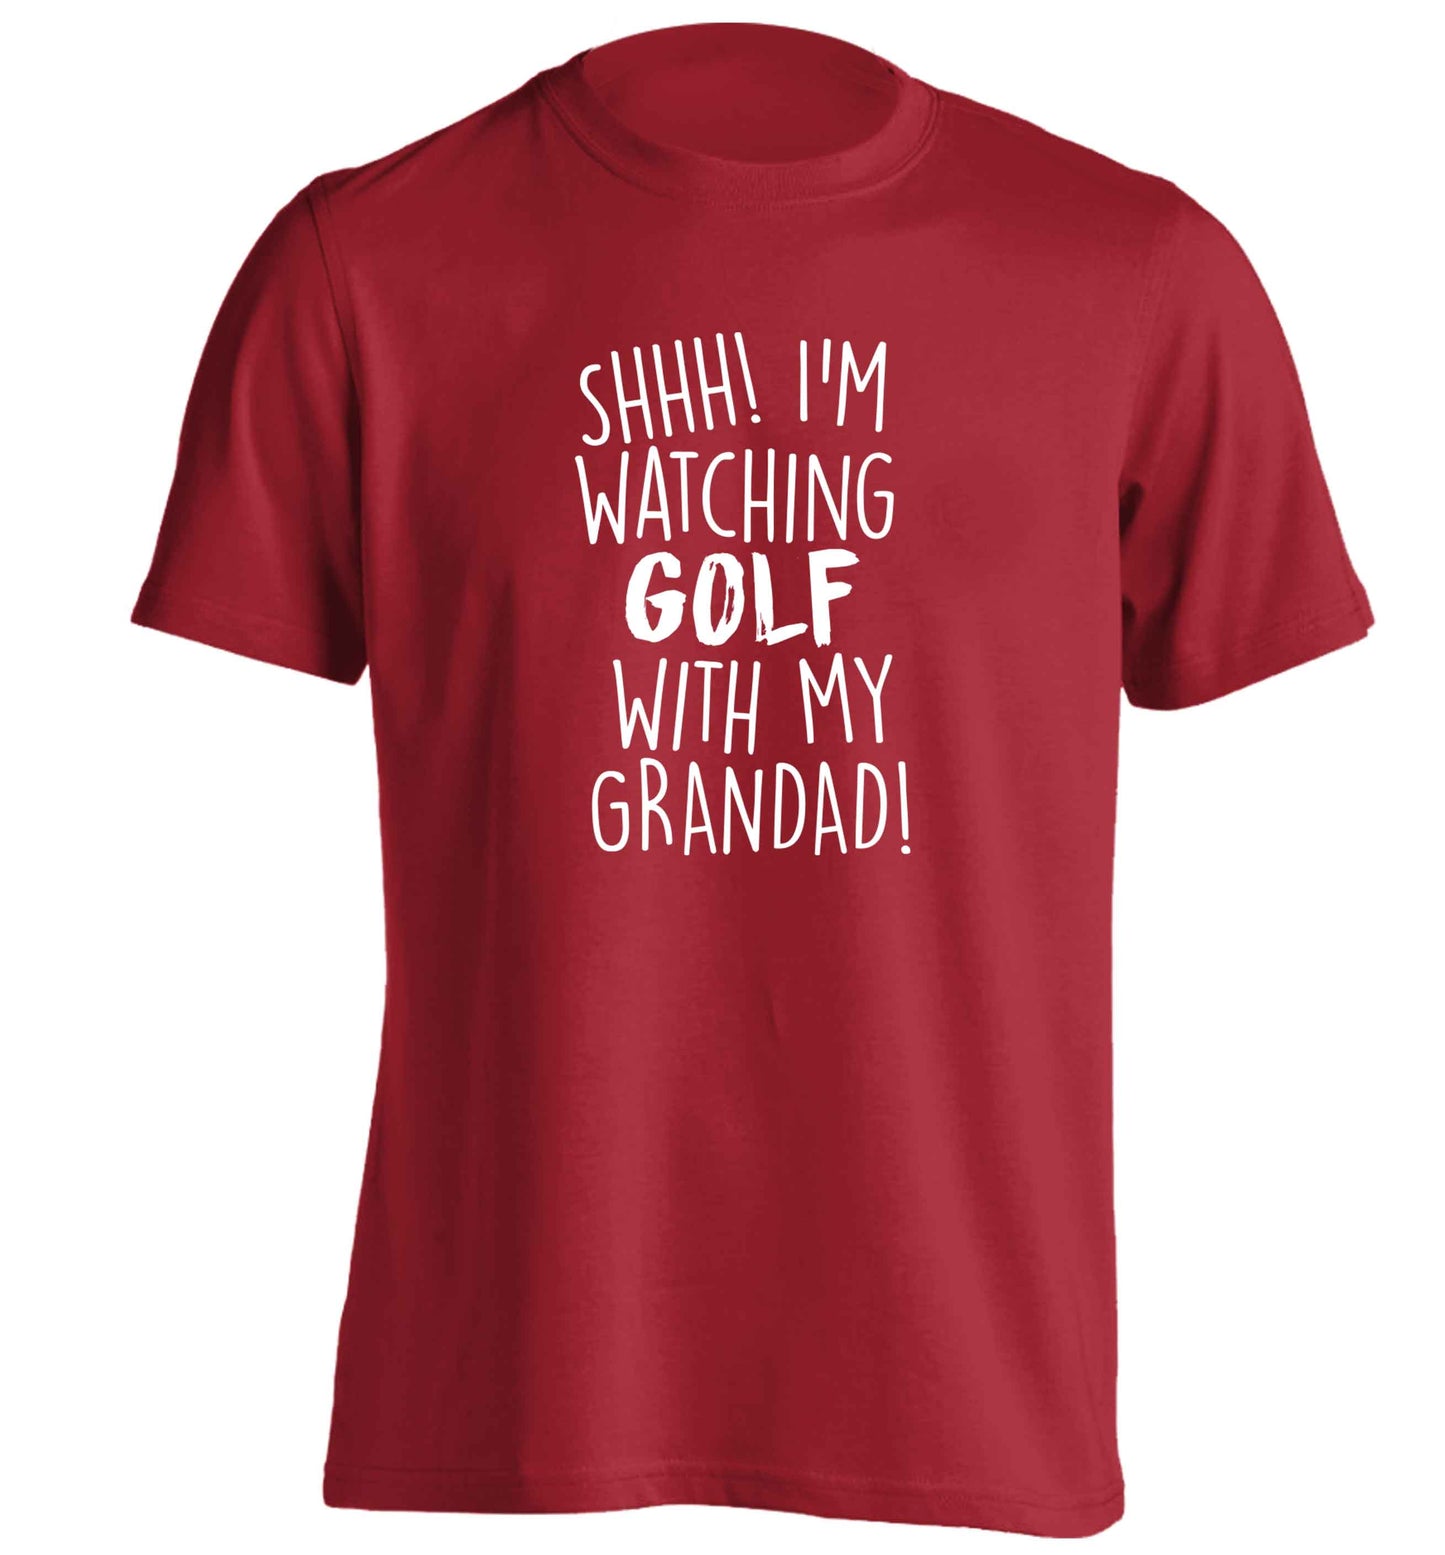 Shh I'm watching golf with my grandad adults unisex red Tshirt 2XL